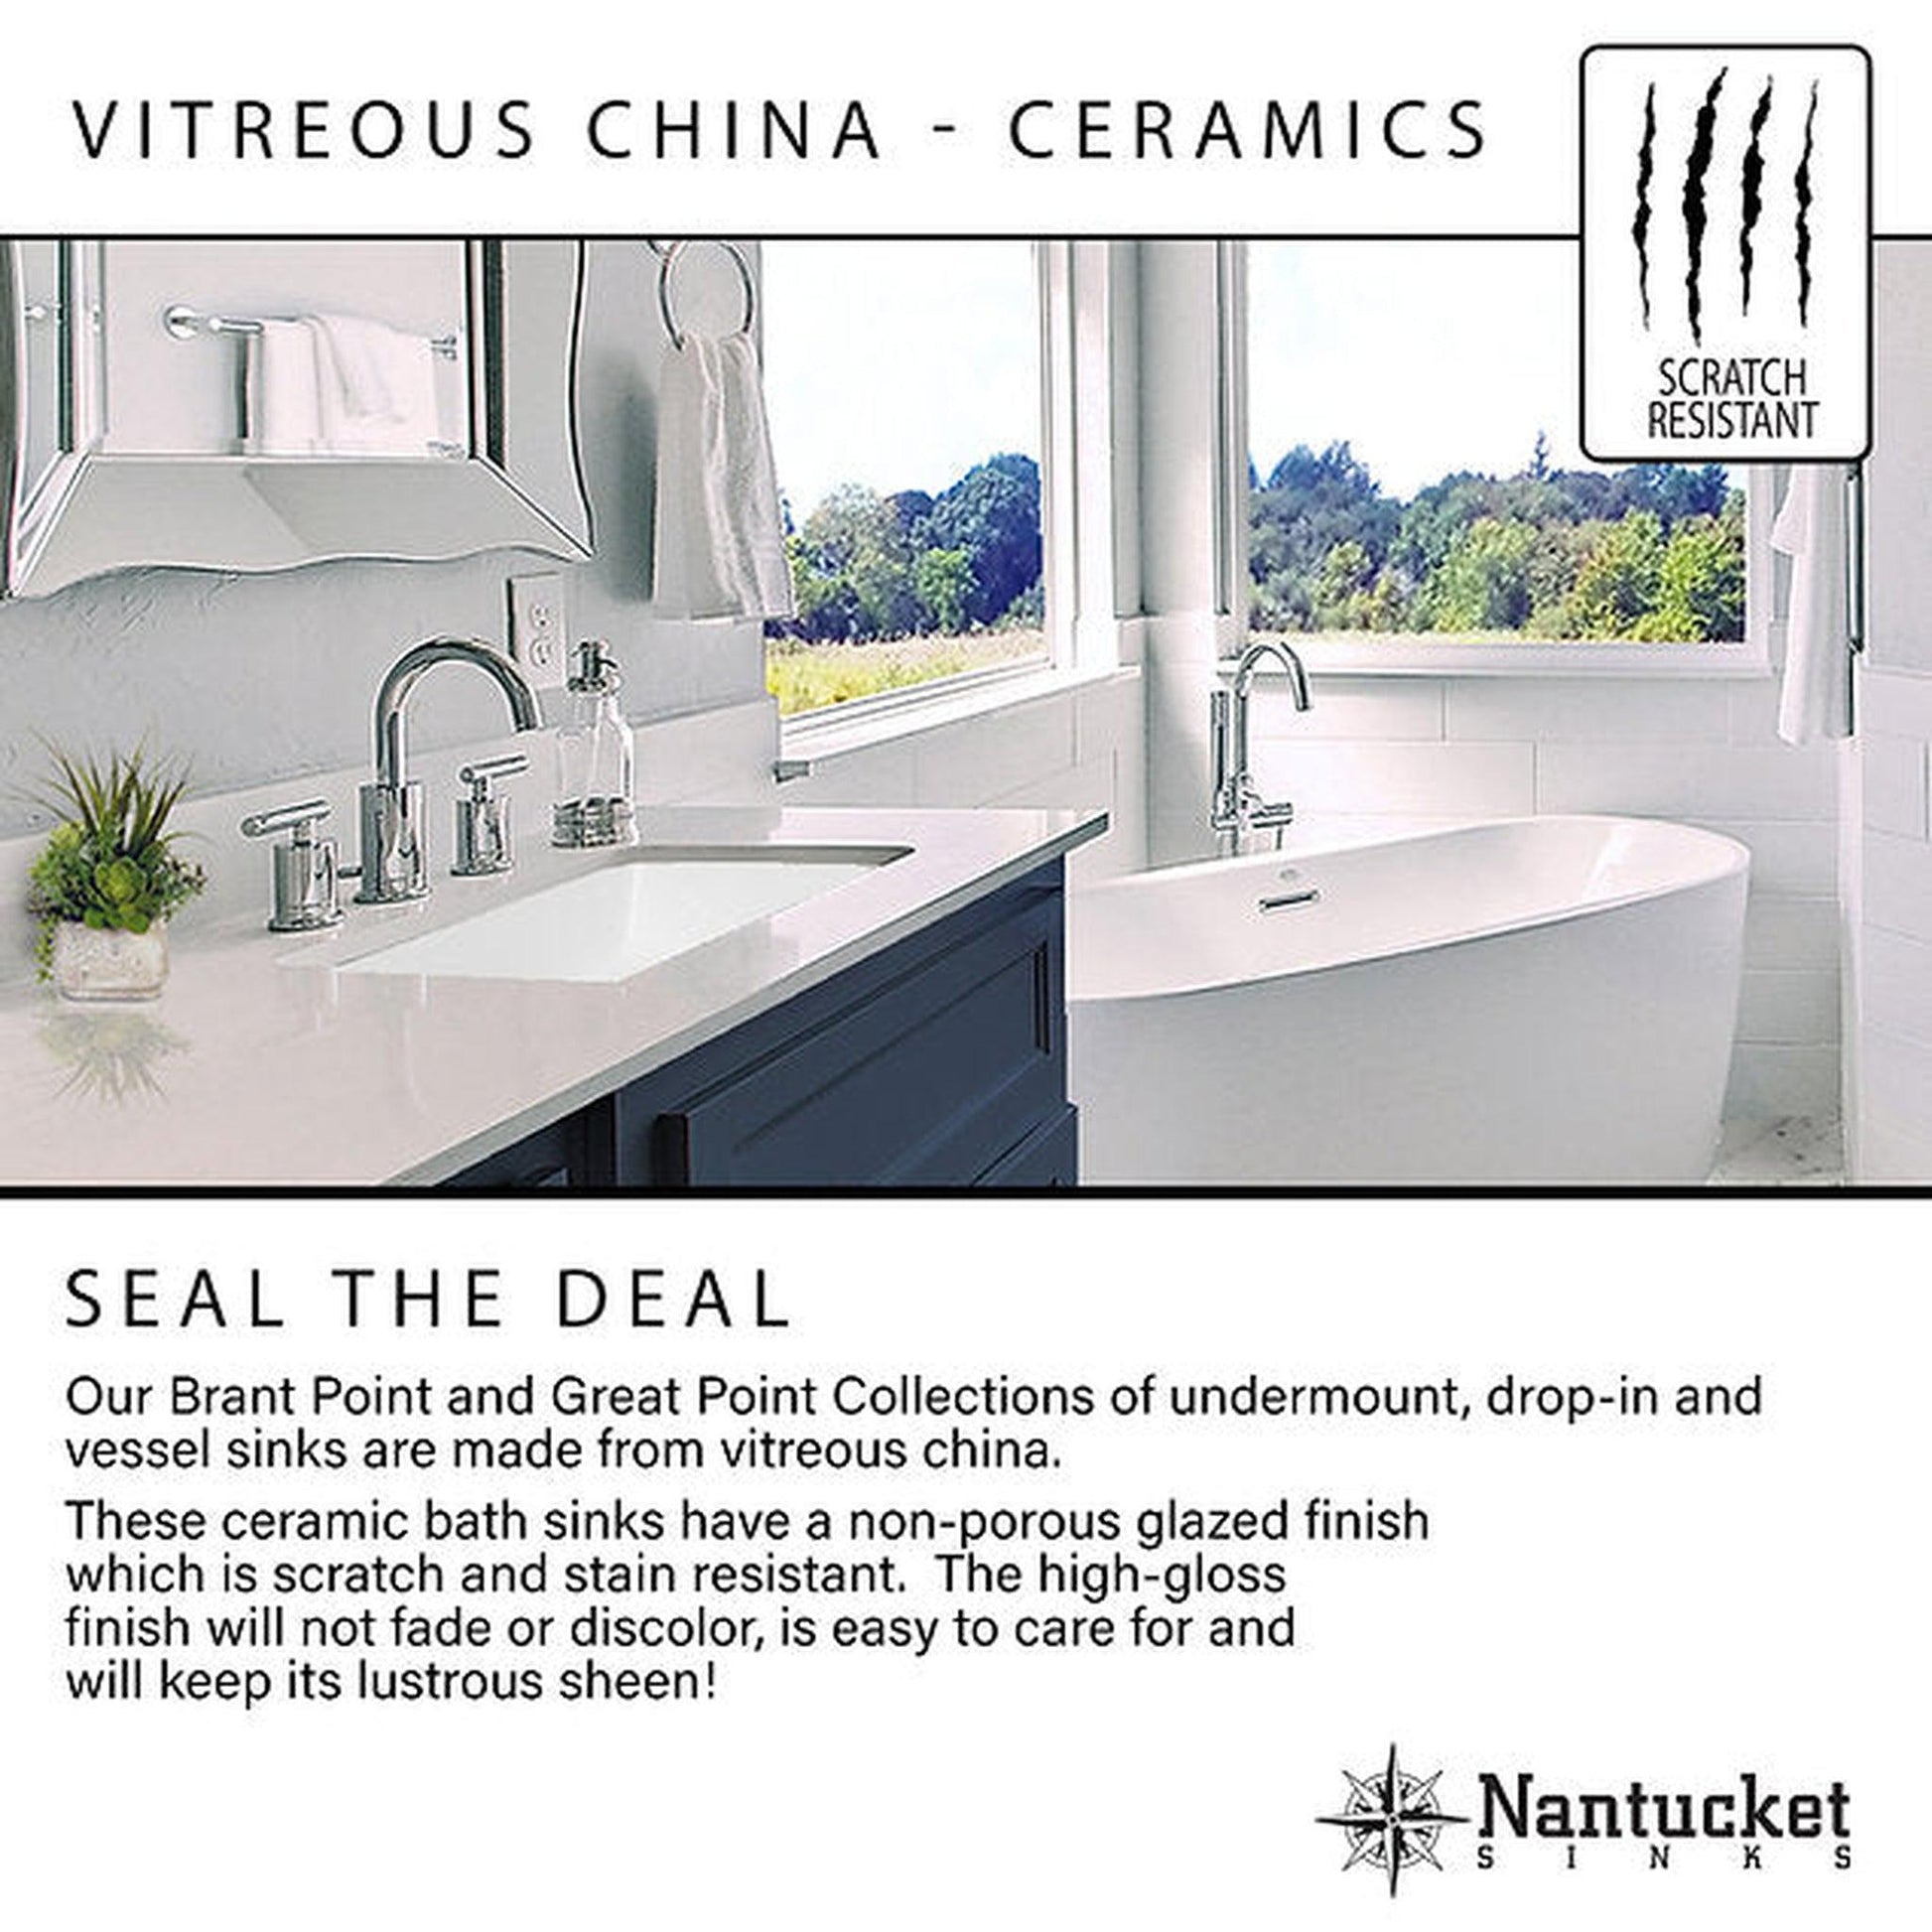 Nantucket Sinks Great Point 15" W x 12" D Oval Porcelain Enamel Glaze Undermount Ceramic Sink In White With Oveflow